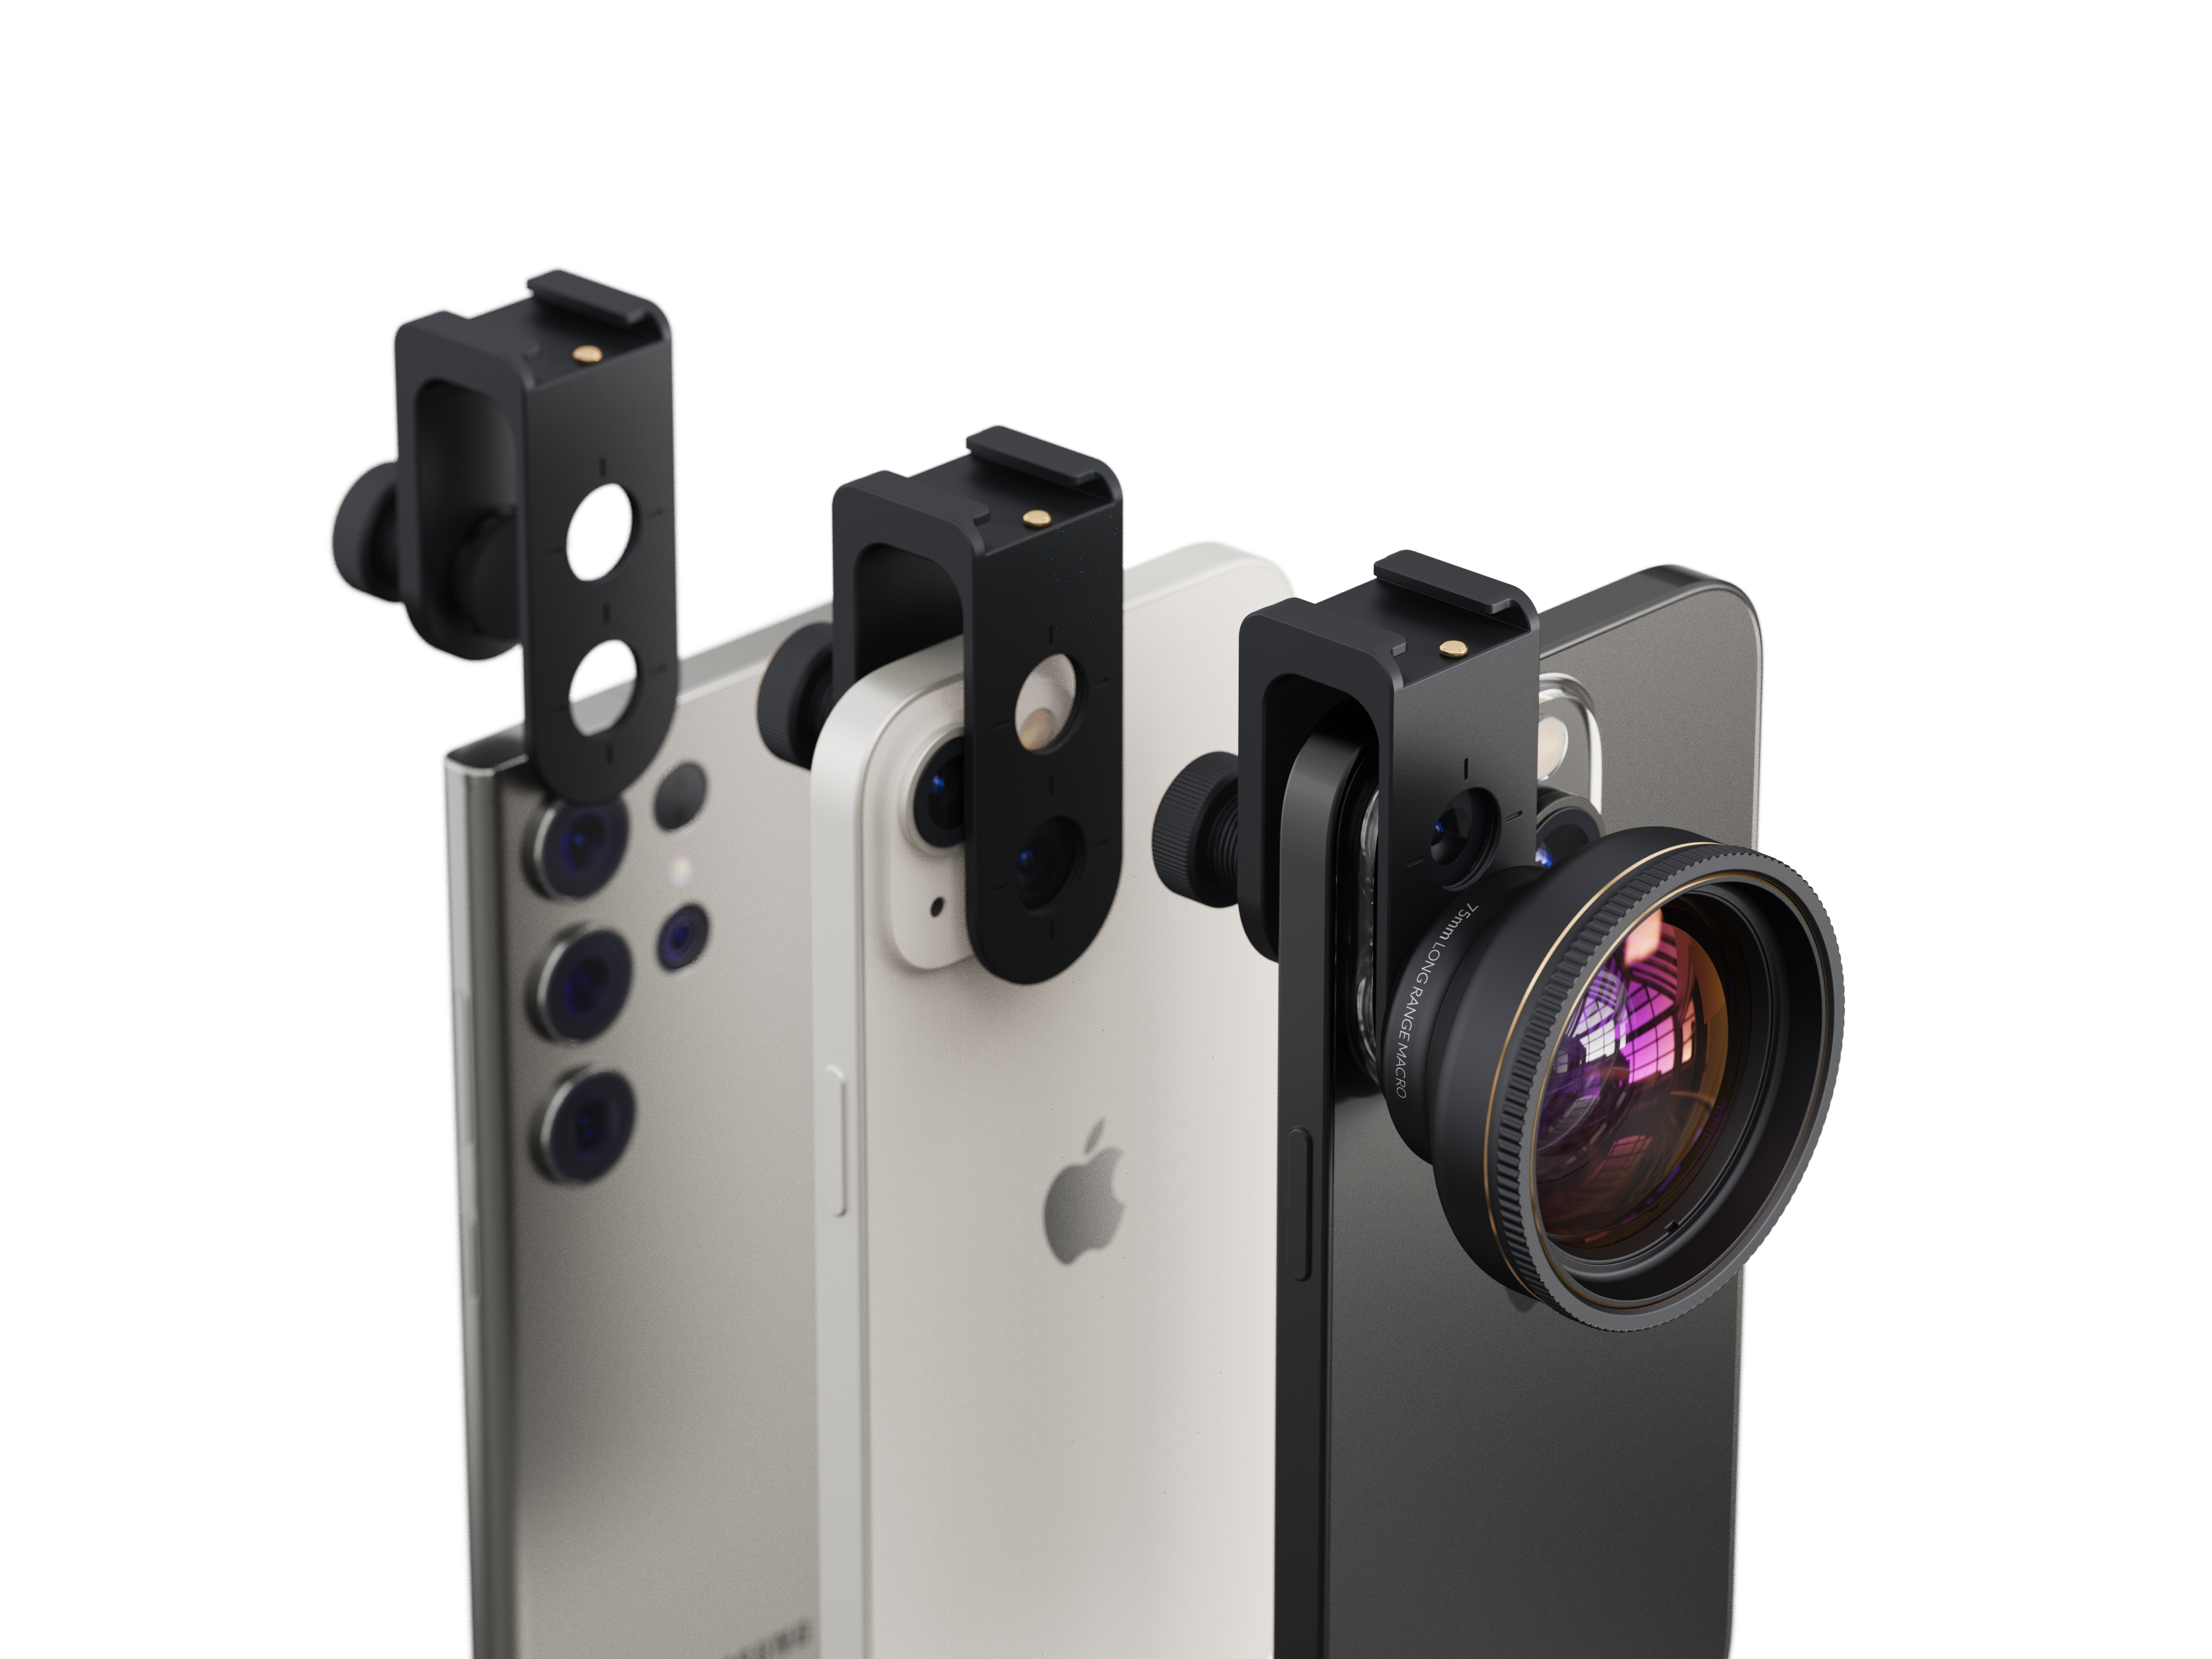 SHIFTCAM LensUltra 75mm Long Range für (Smartphone T2-Mount Macro Makroobjektiv Smartphone - - Objektiv